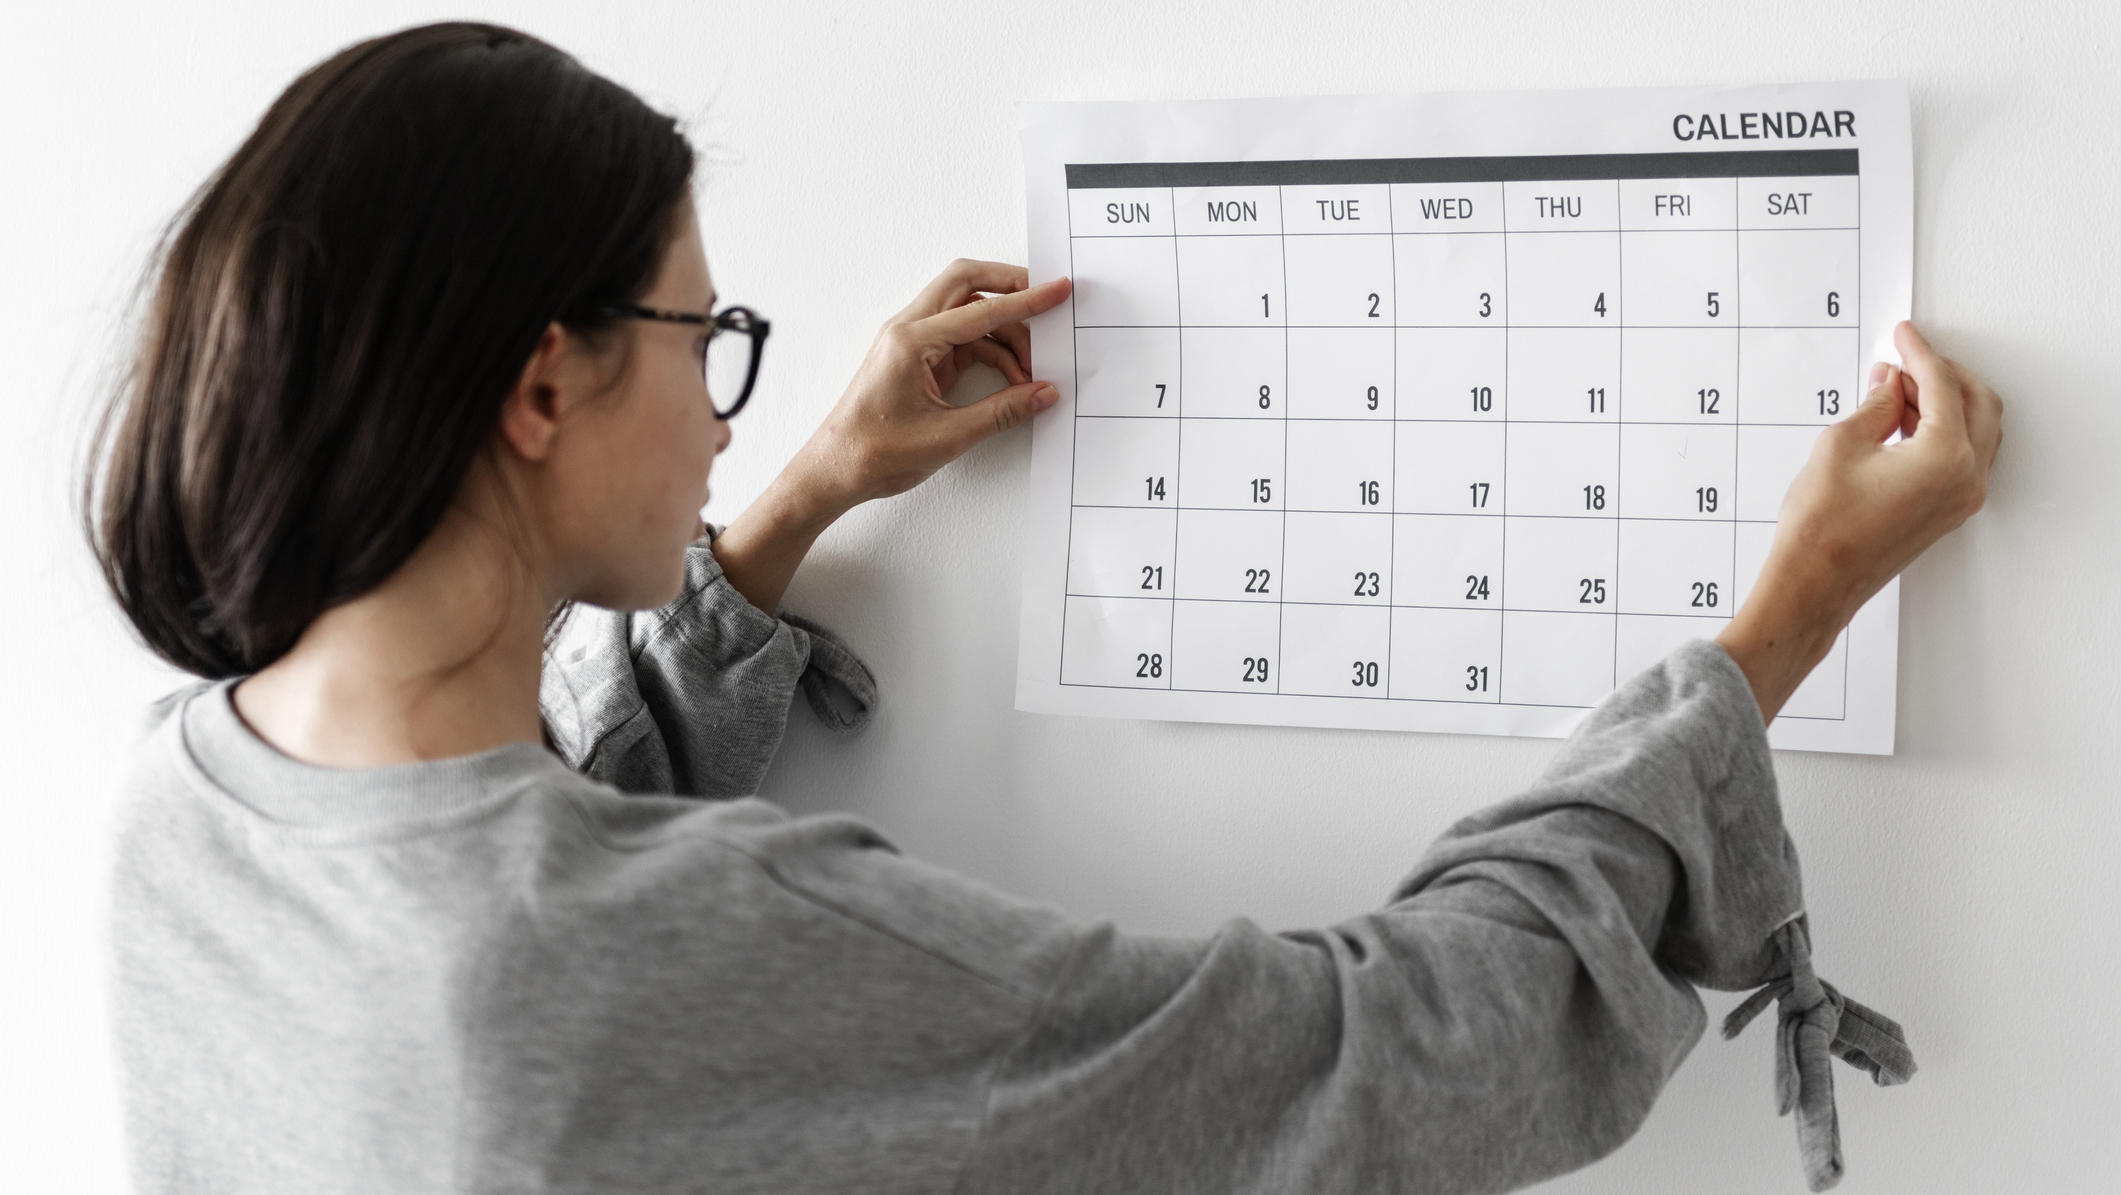 Kalender november 2021 lengkap dengan weton